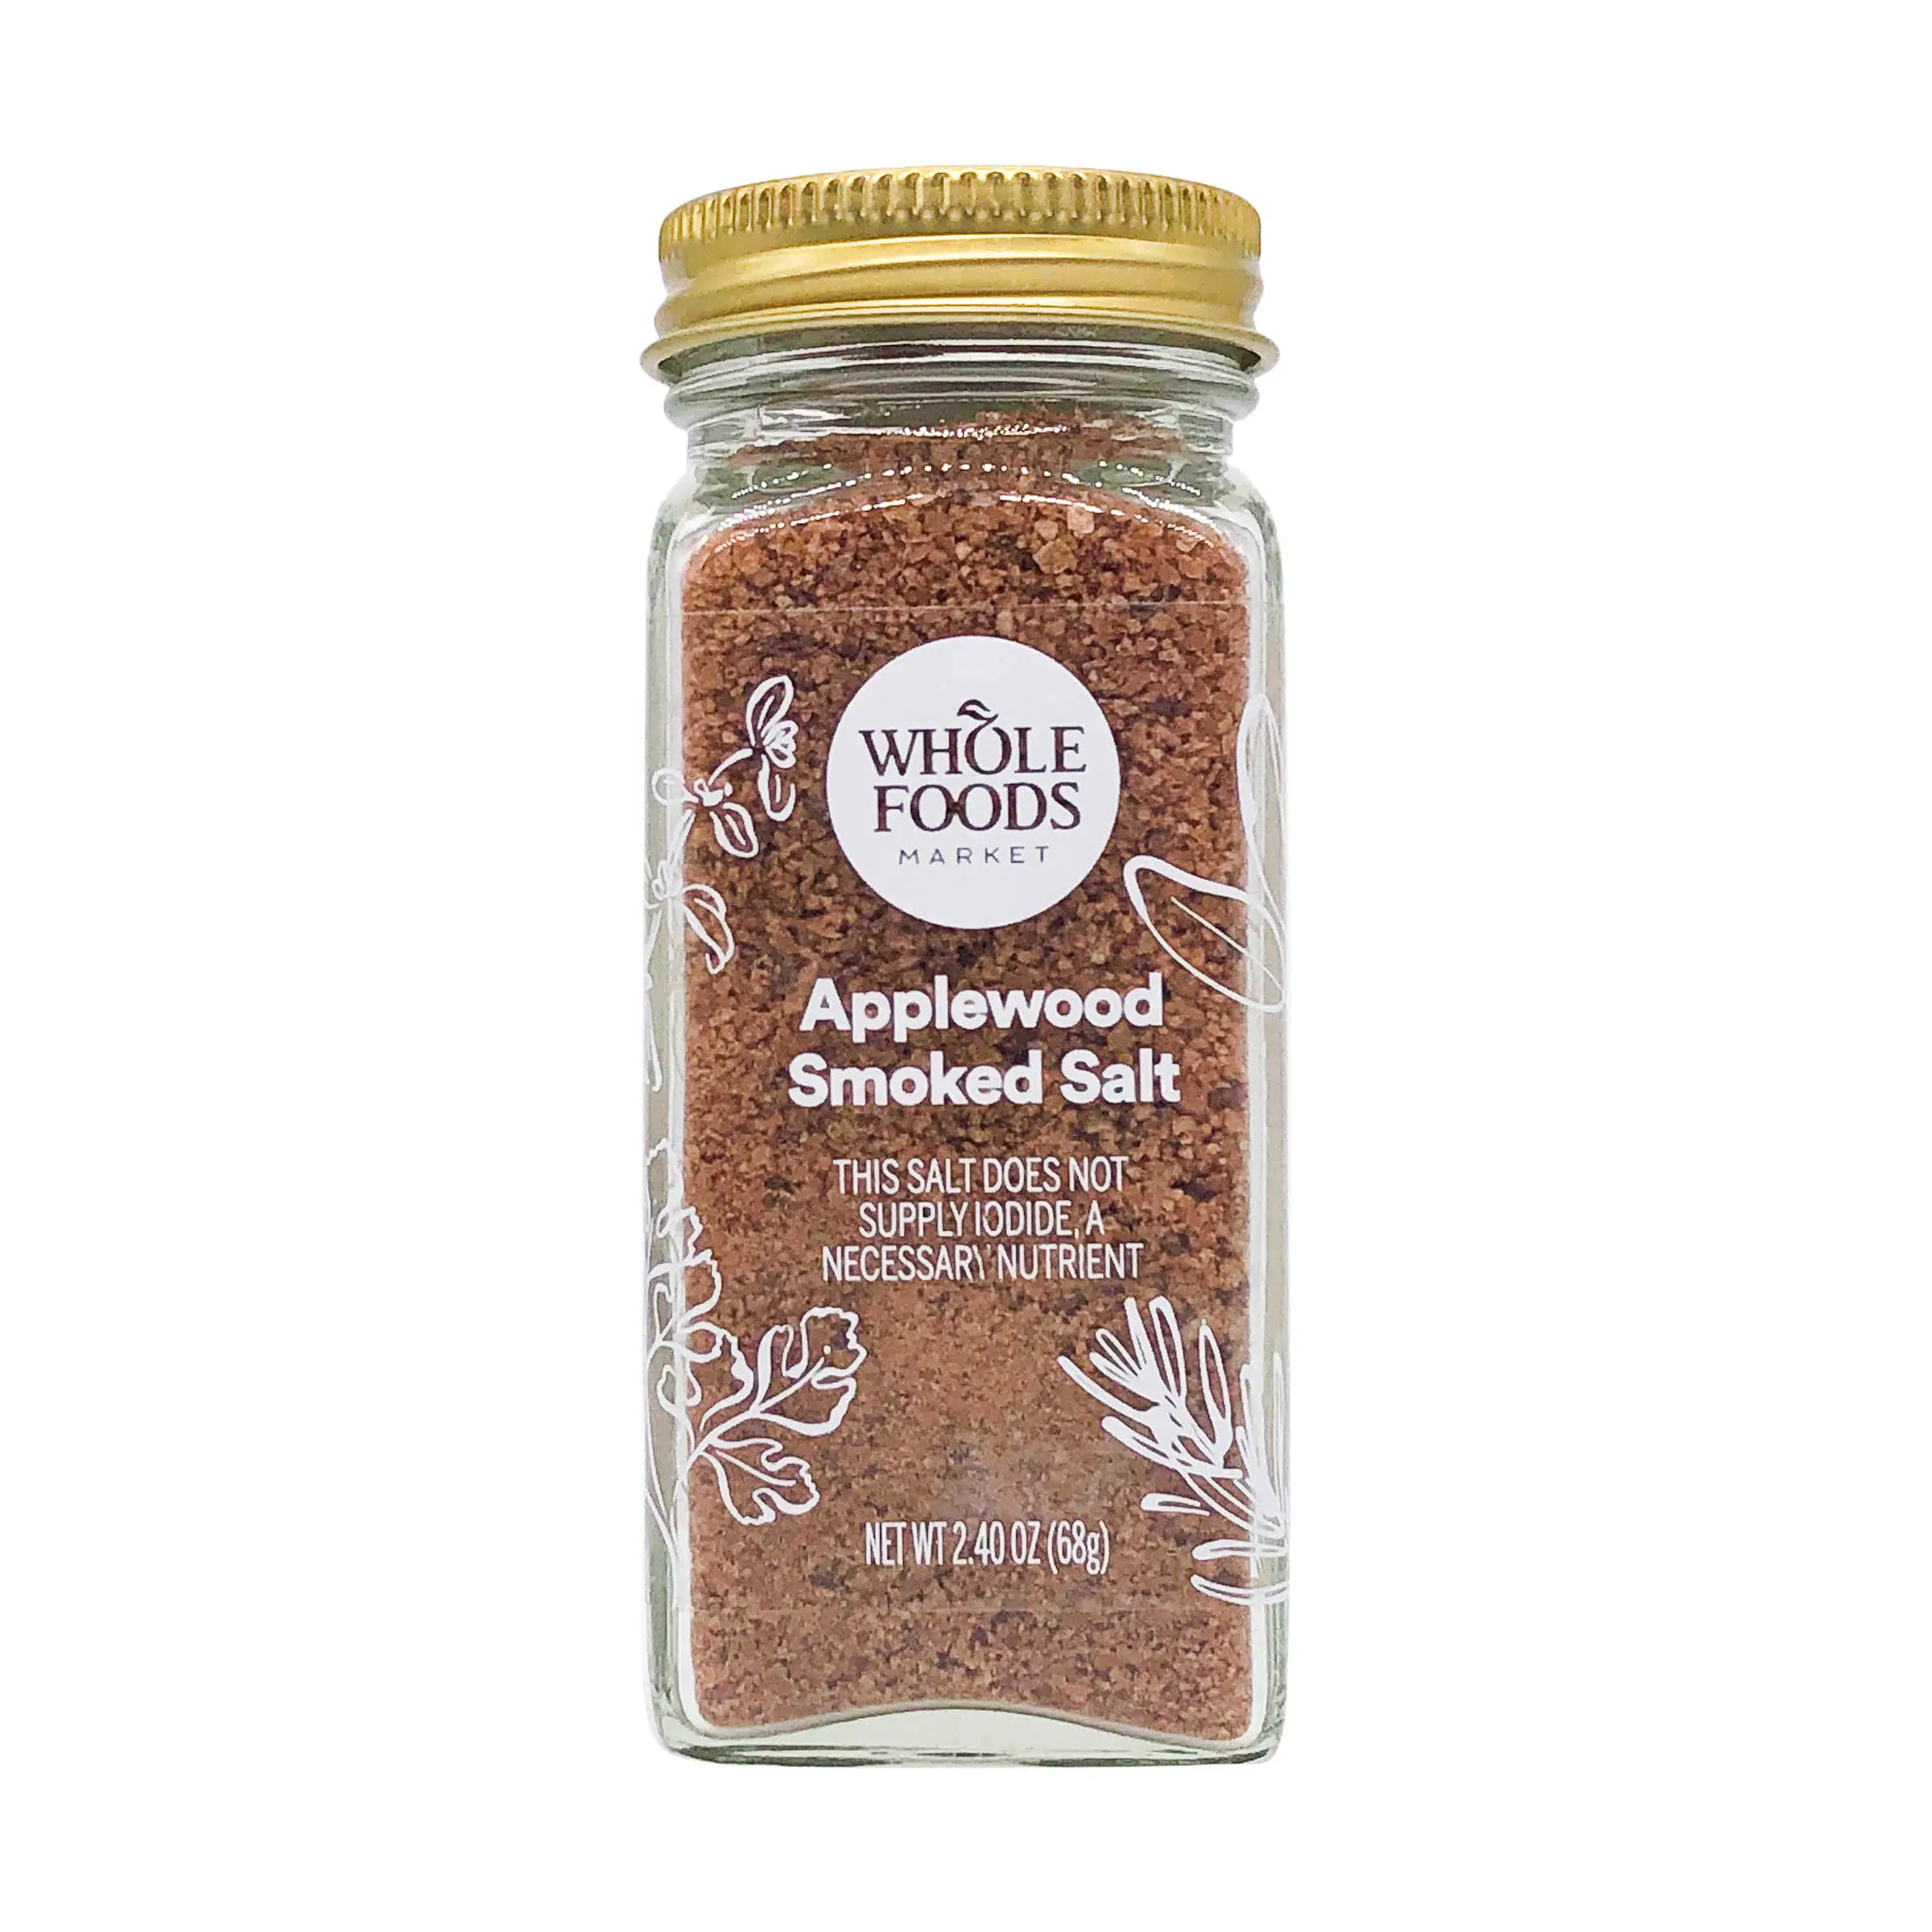 applewood smoked salt - What is applewood smoked salt good for